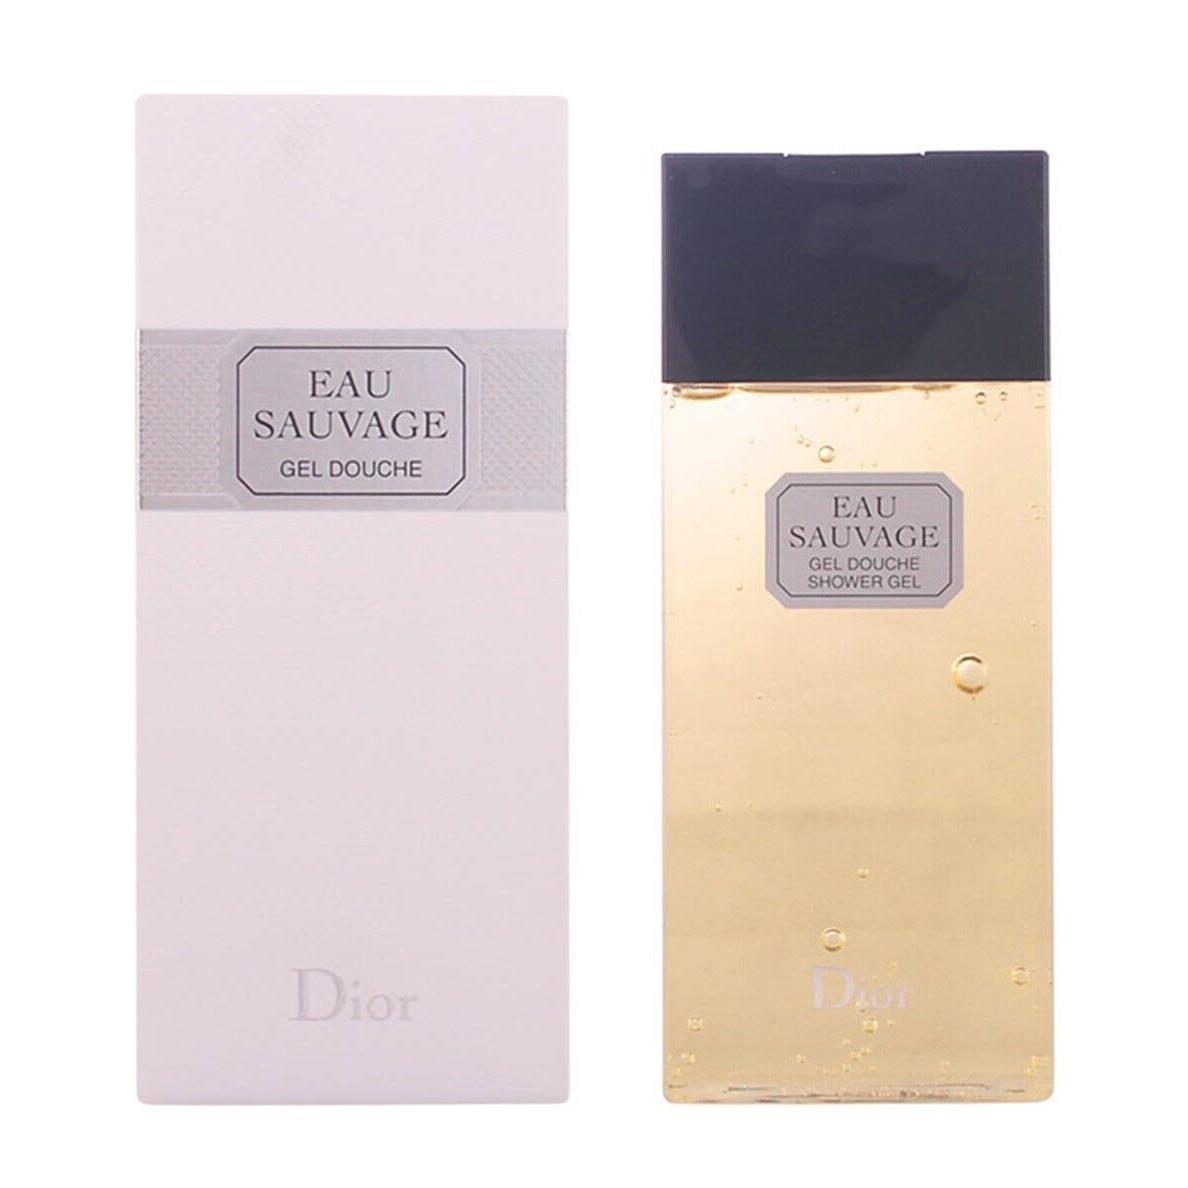 Eau Sauvage by Christian Dior For Men Shower Gel 6.8 oz 200 ml